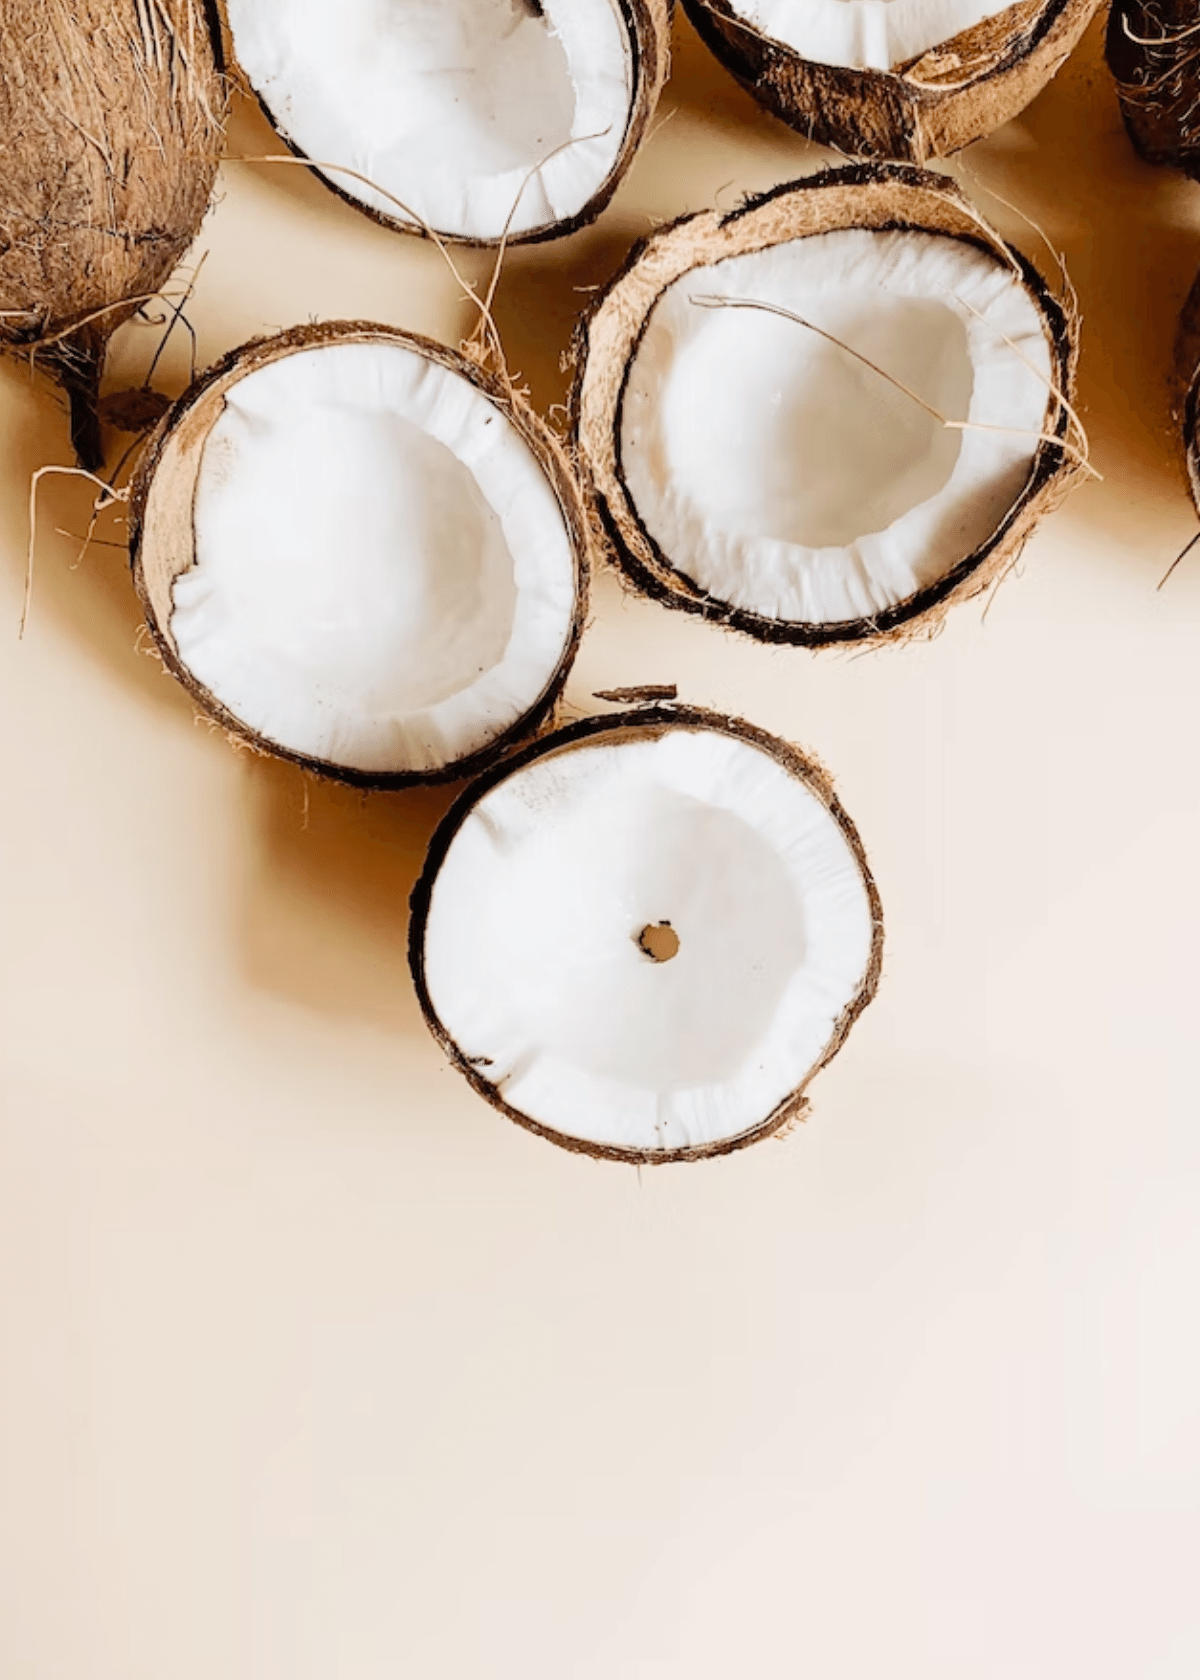 coconut oil mct